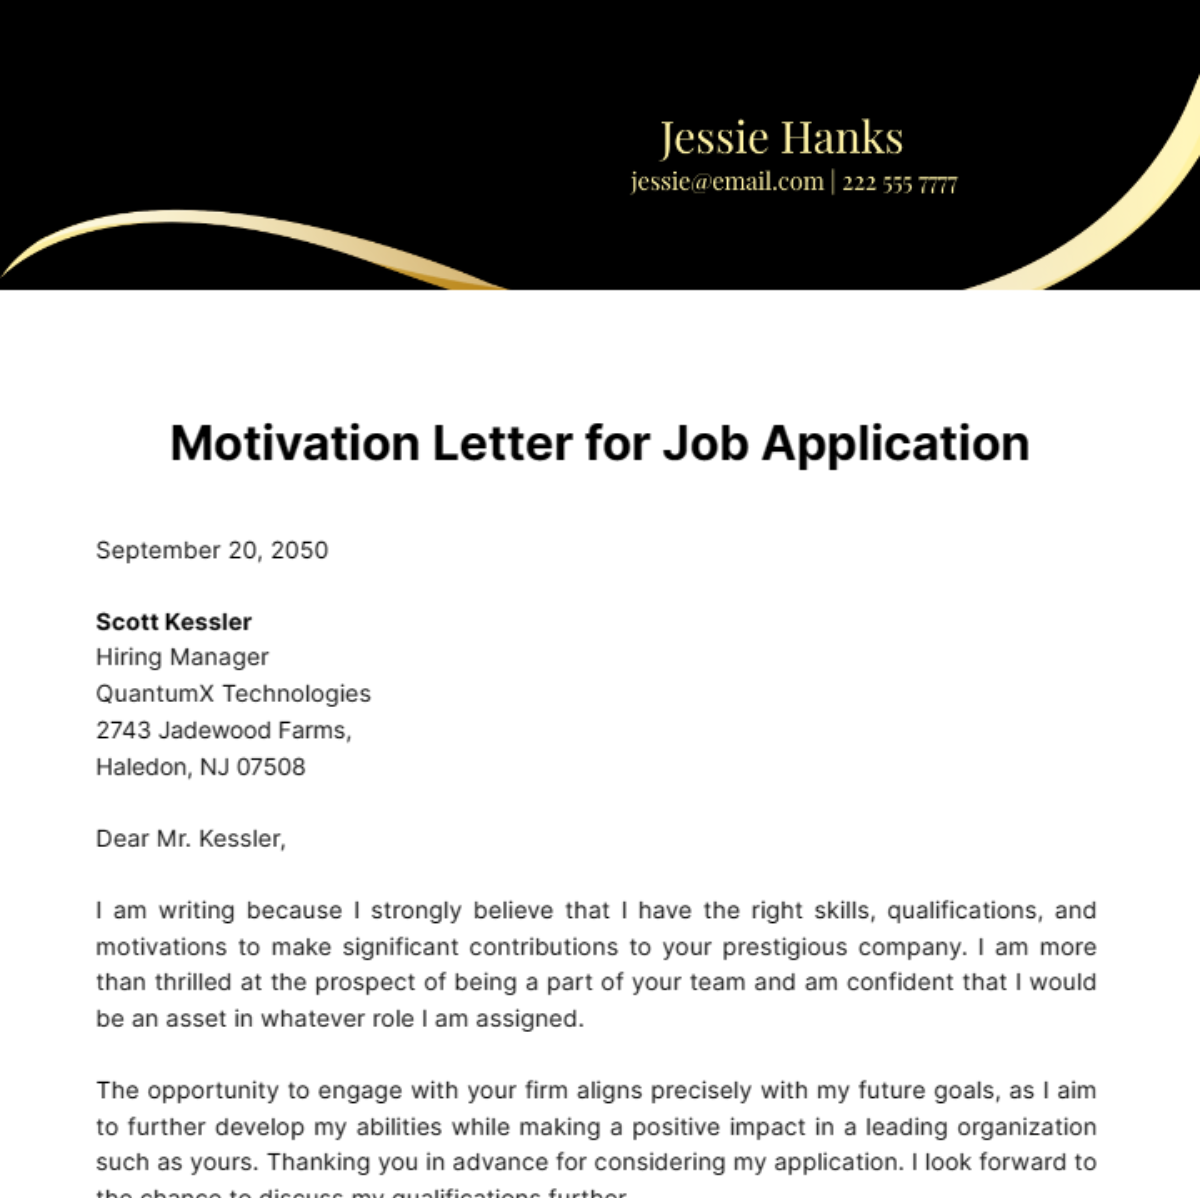 Motivation Letter for Job Application Template